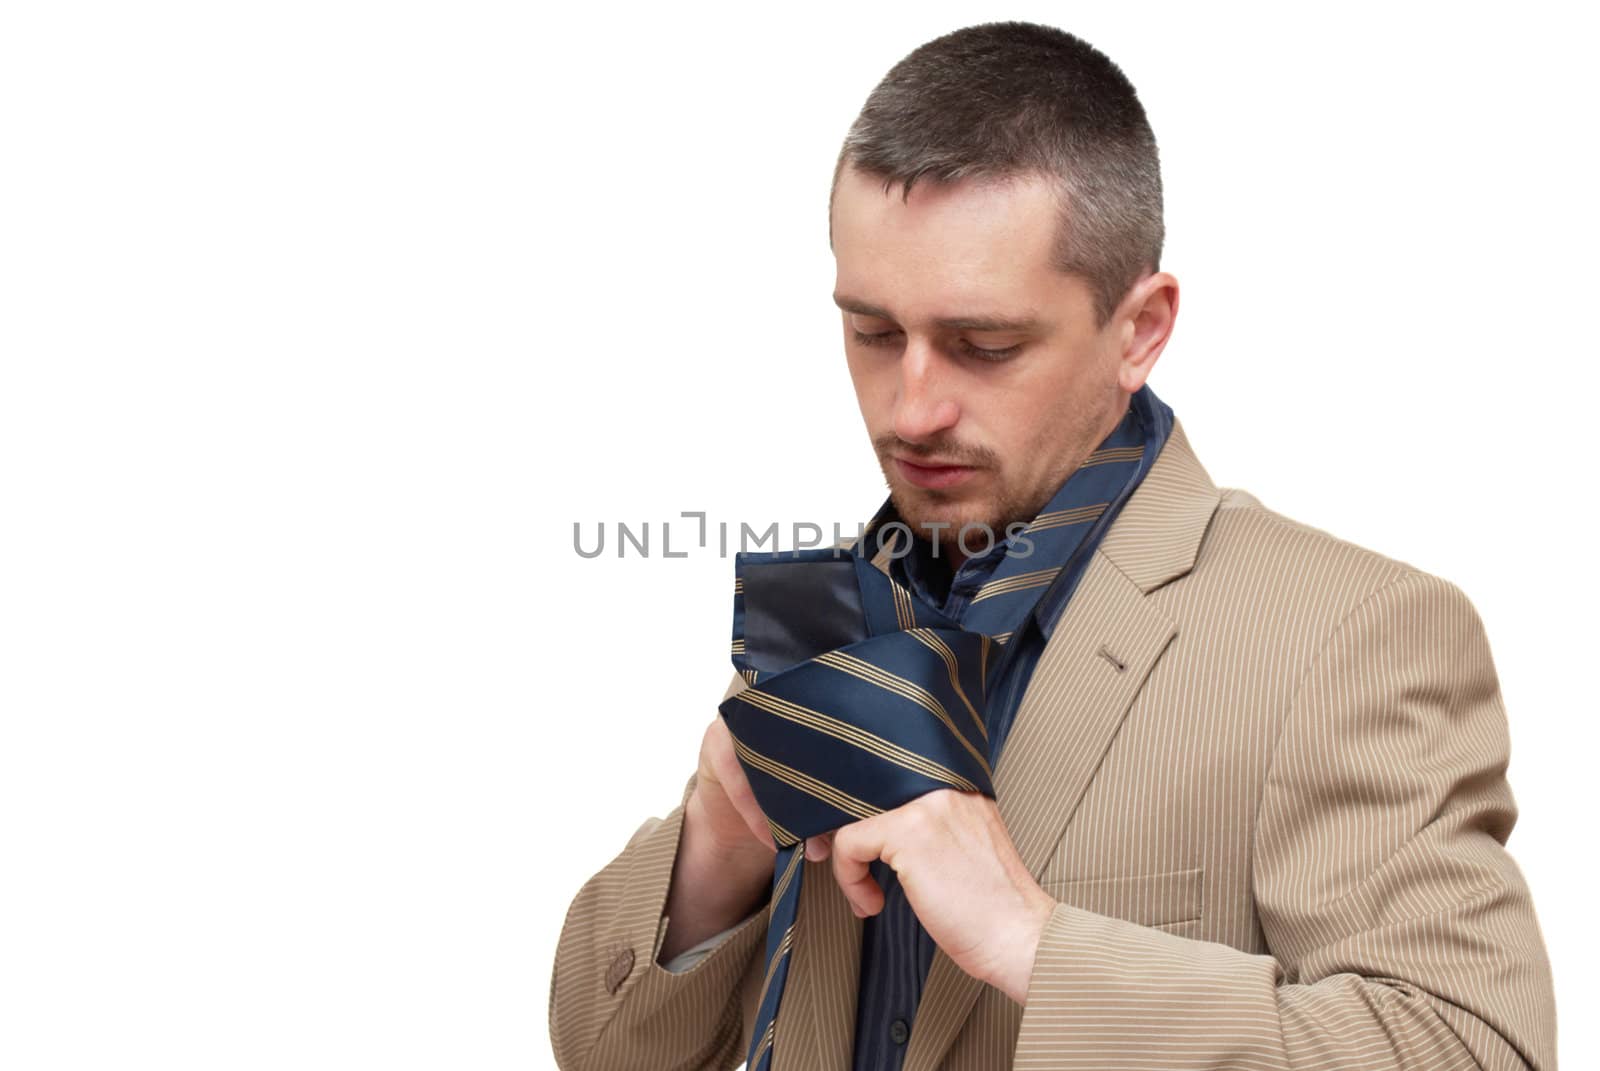 The man fastening a tie by Olinkau